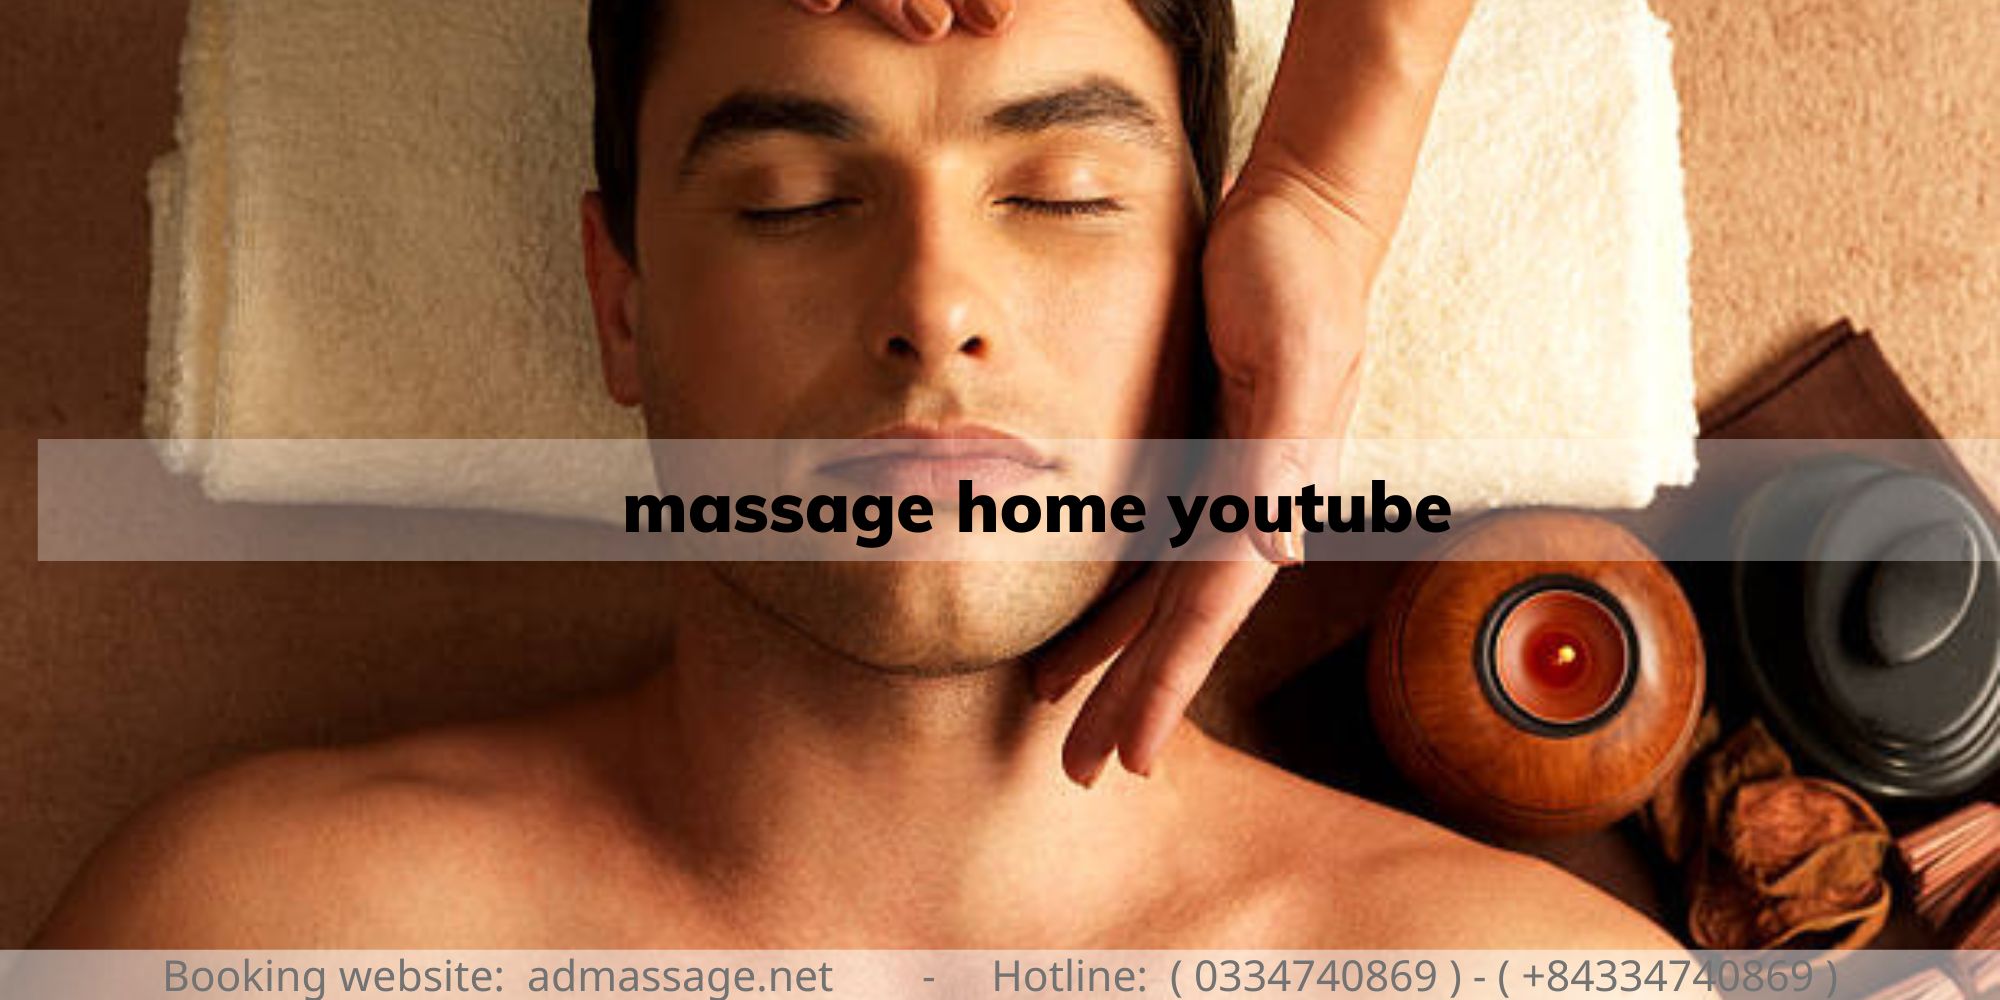 massage home youtube